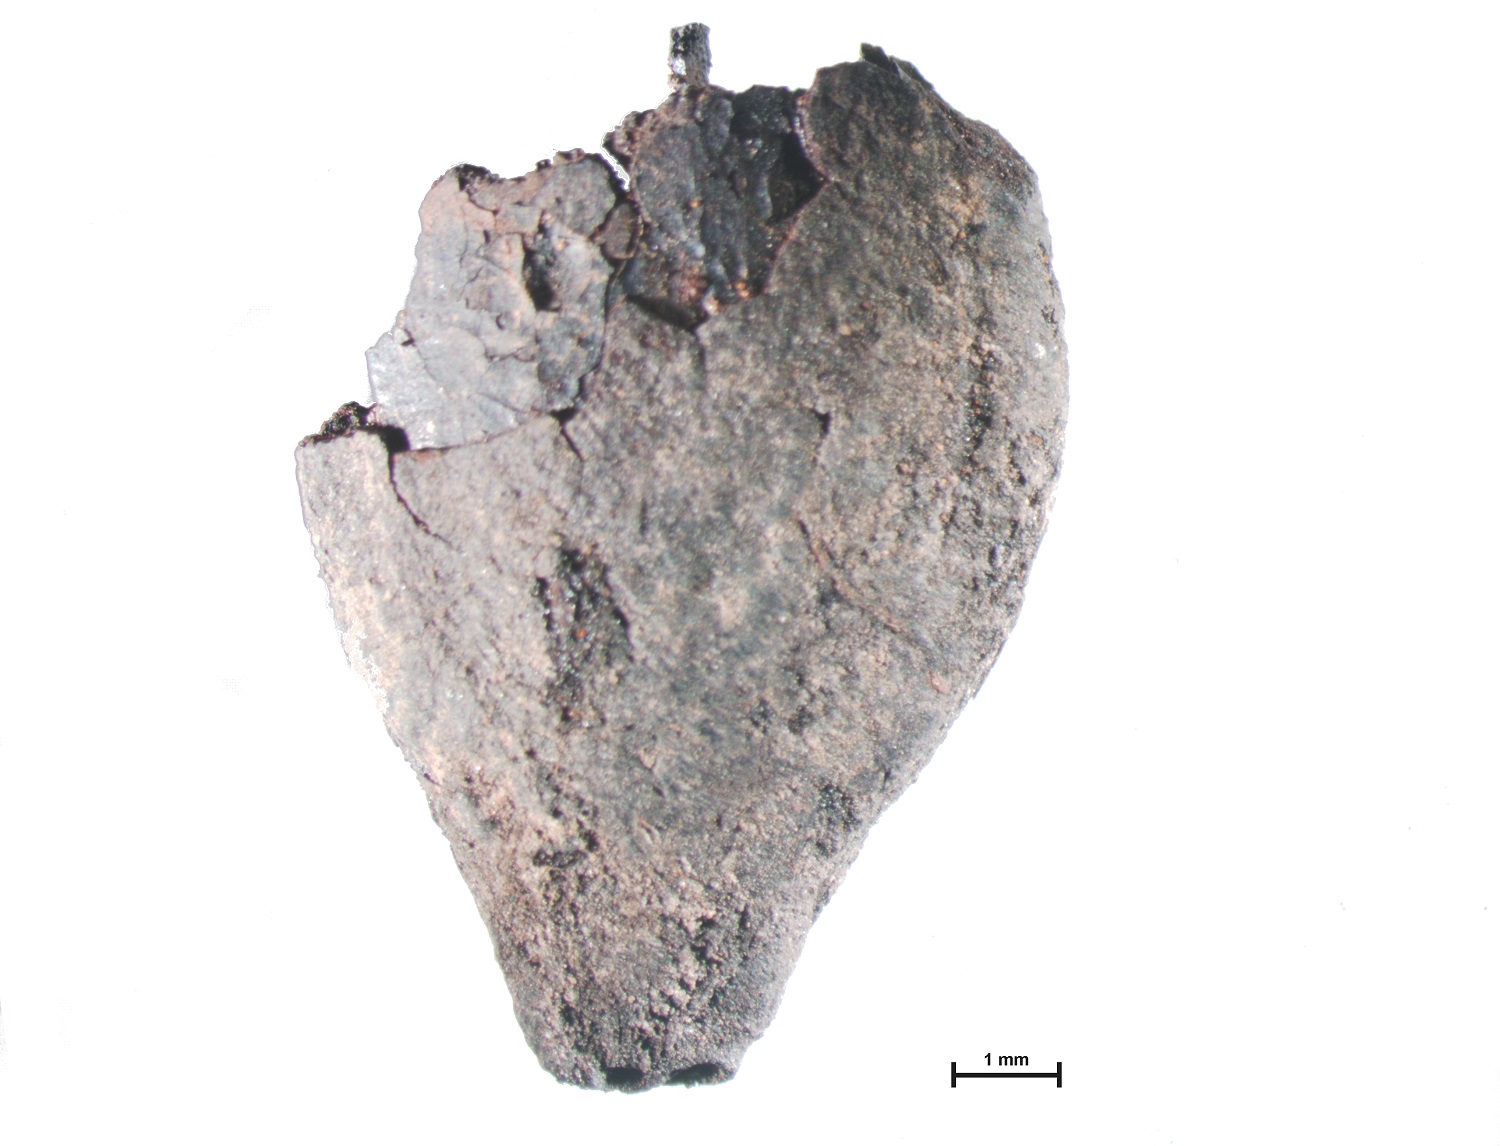 A microscopic image of a cucurbita taken during archaeobotanical analysis